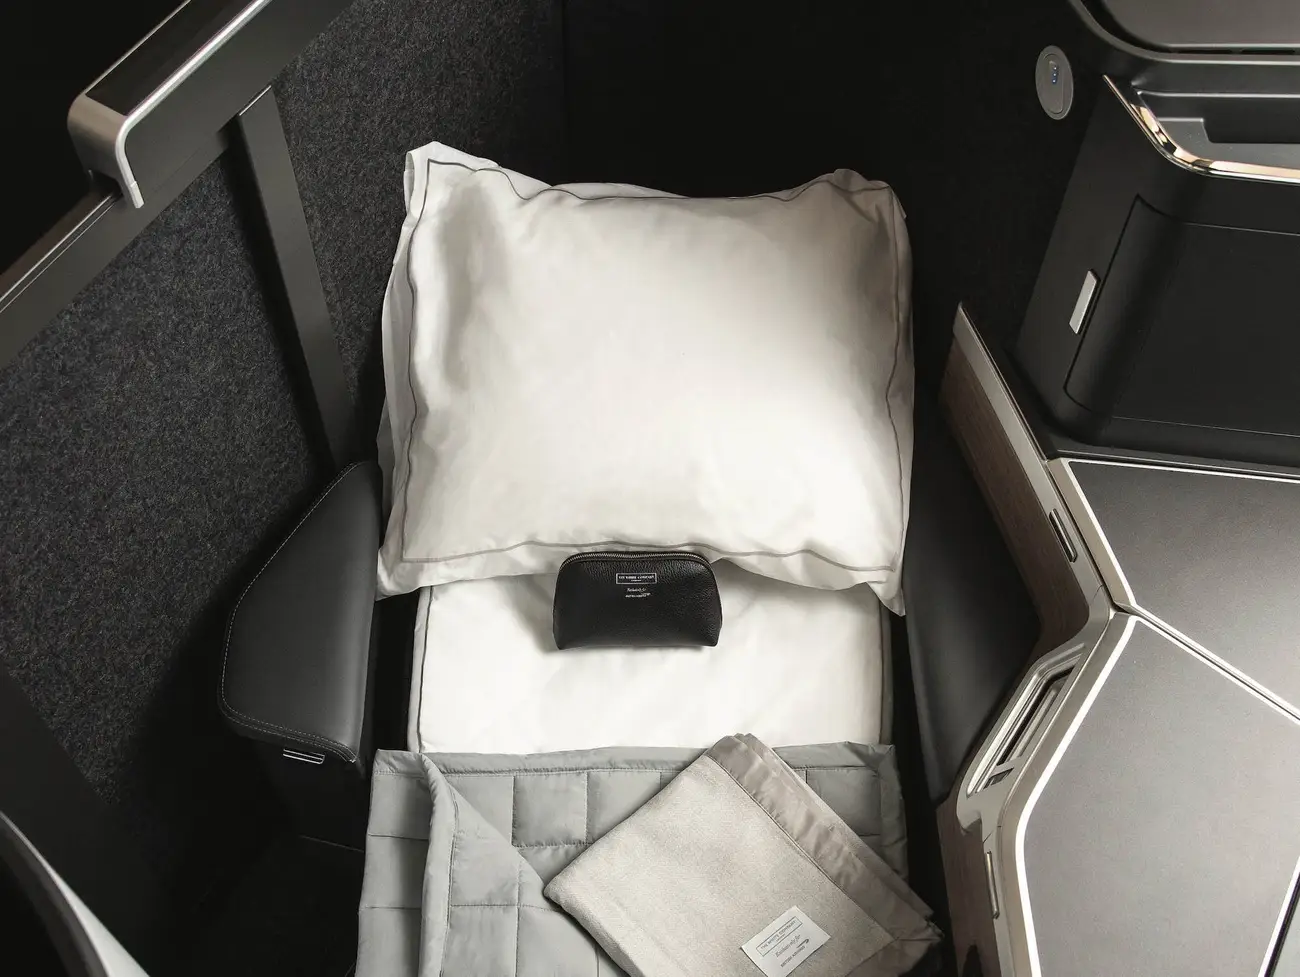 British Airways Club World - Bed with Amenity Kit